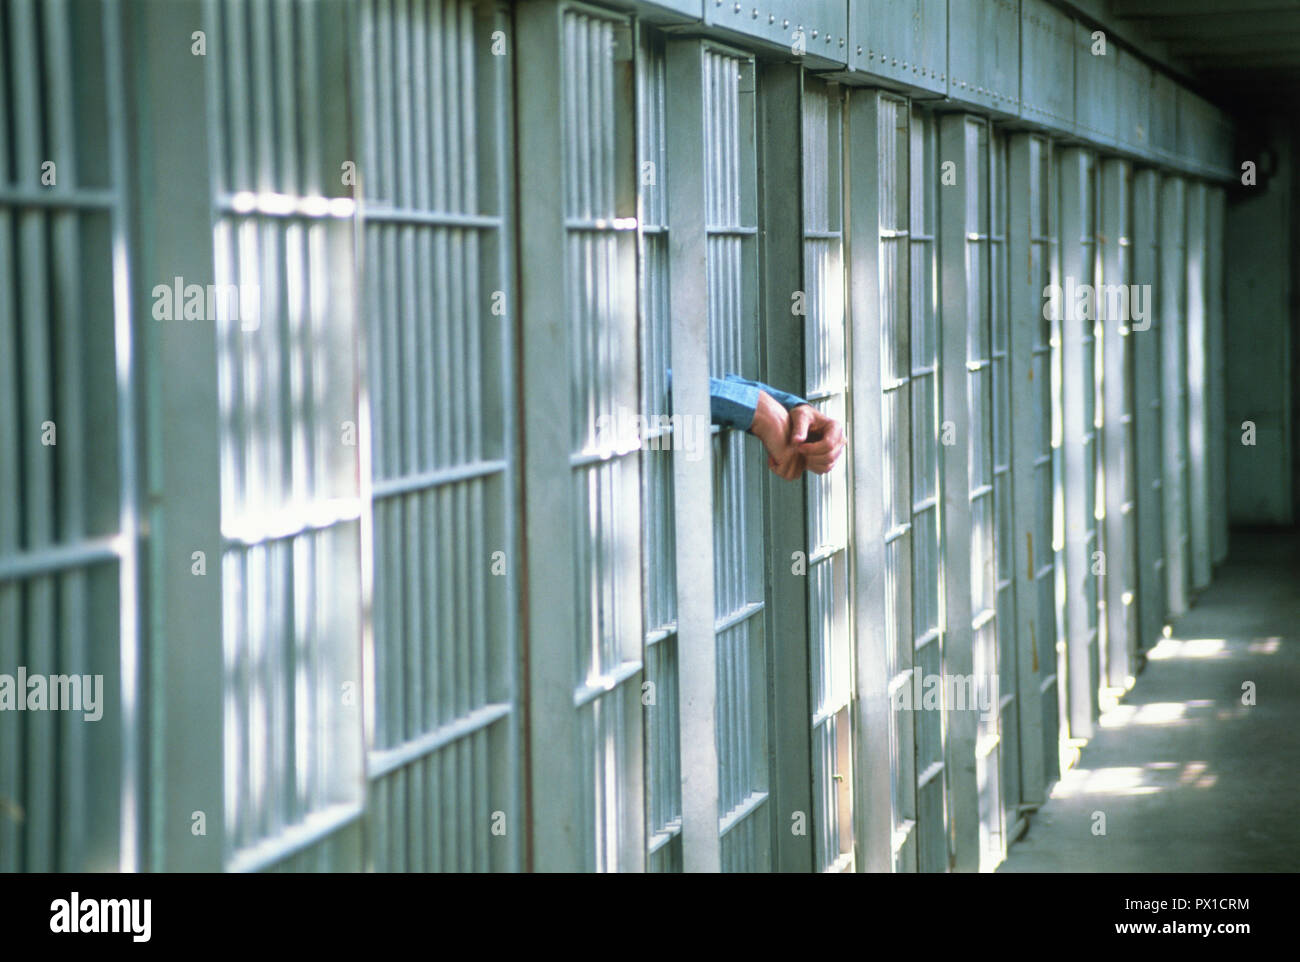 Single prisoner in a penitentiary cell block, USA Stock Photo